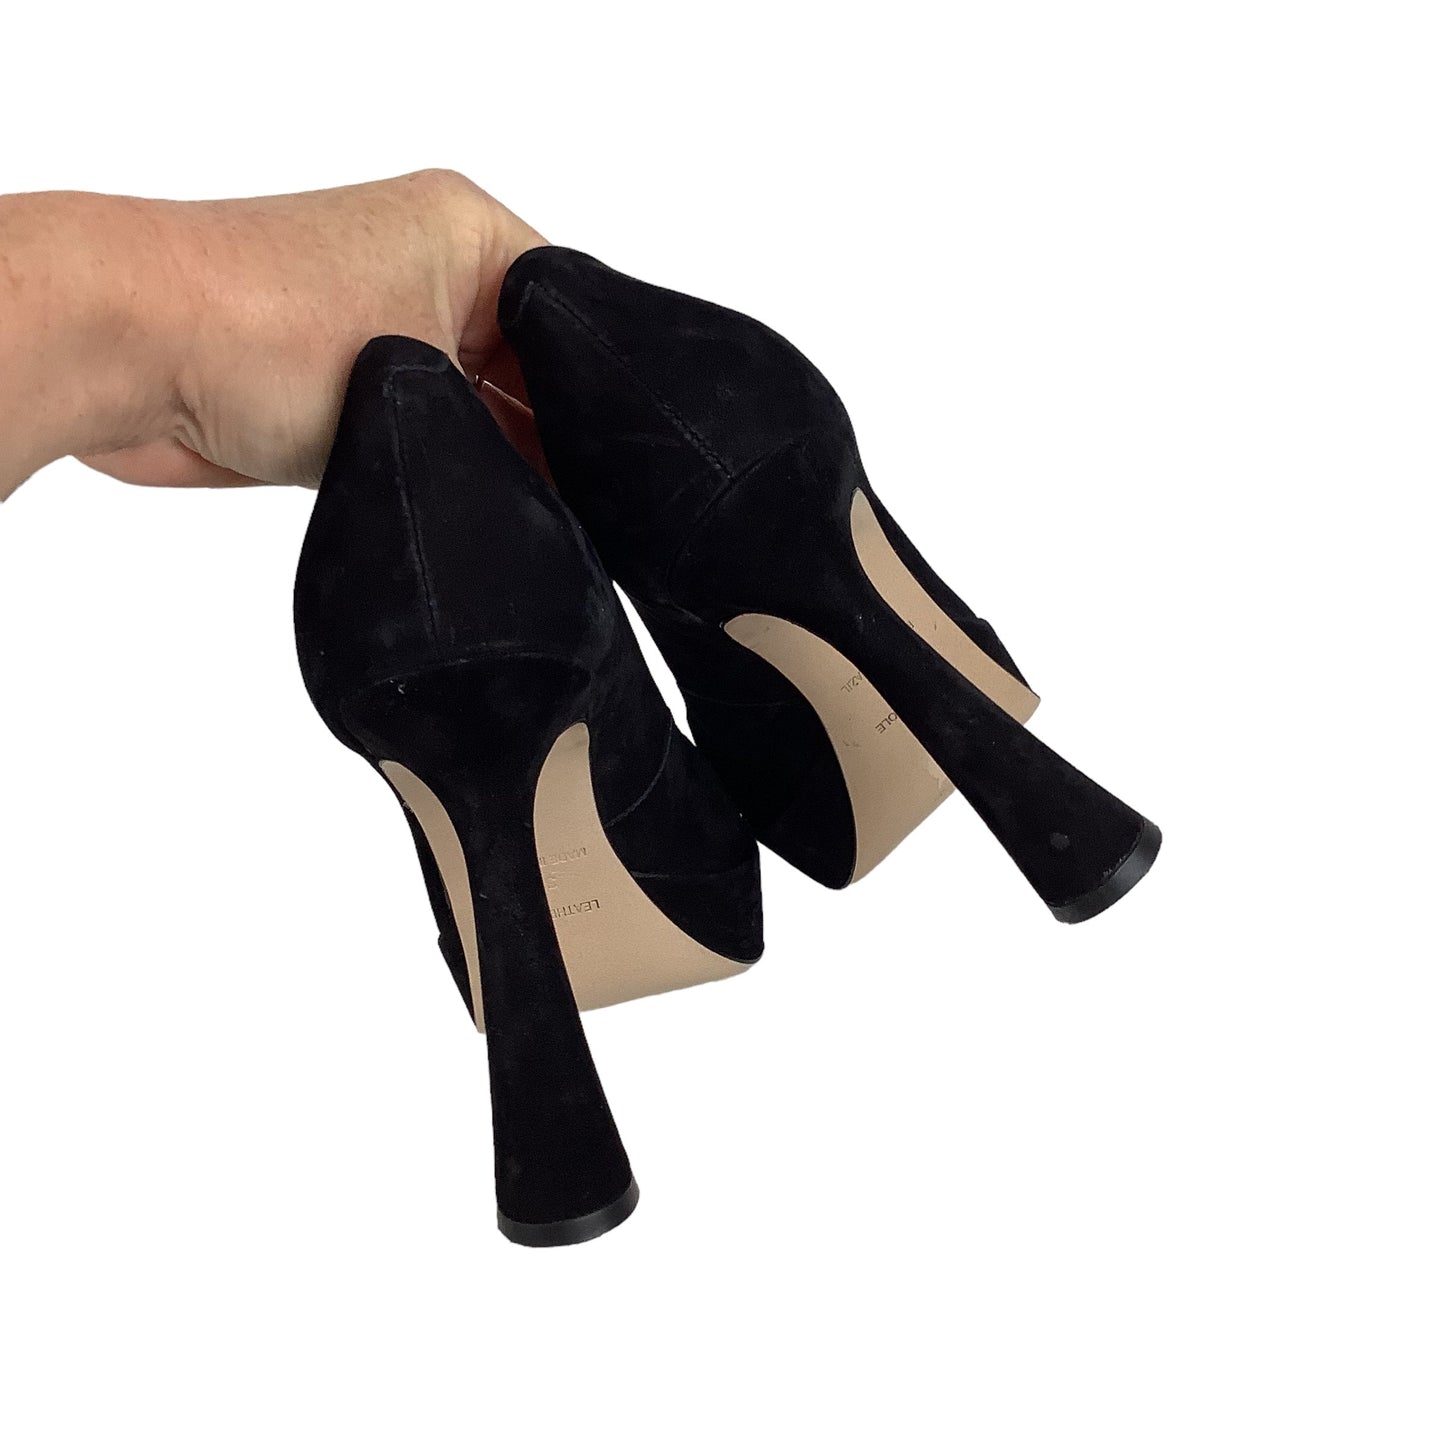 Black Shoes Heels Stiletto Maeve, Size 8.5 (39)